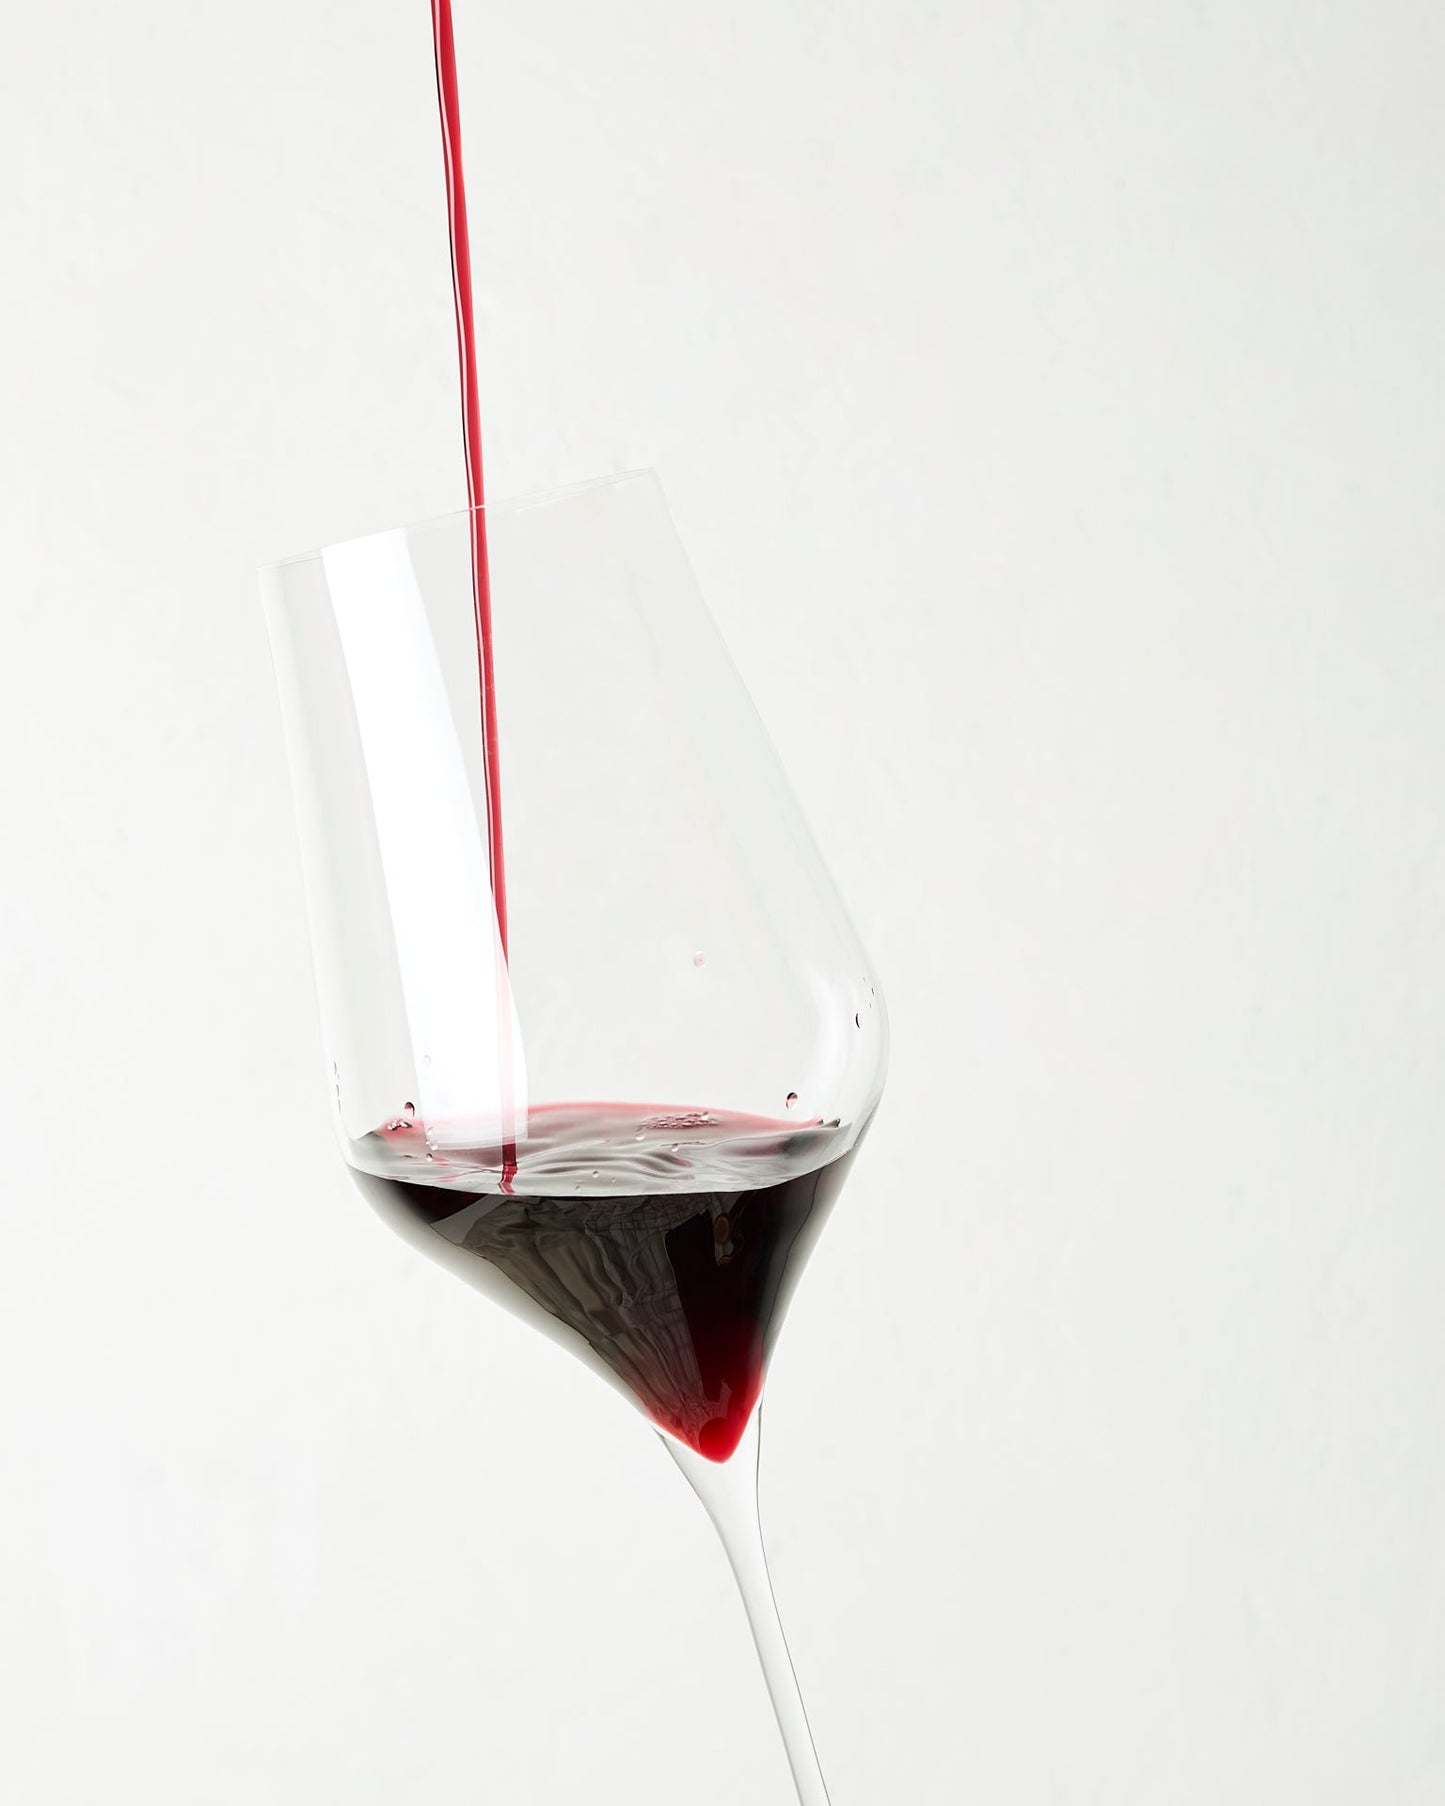 Crystal Wine Glasses. European Designed. Lead Free Stemware. 'Duke'. (520ml) 4x Glasses - Anders & White